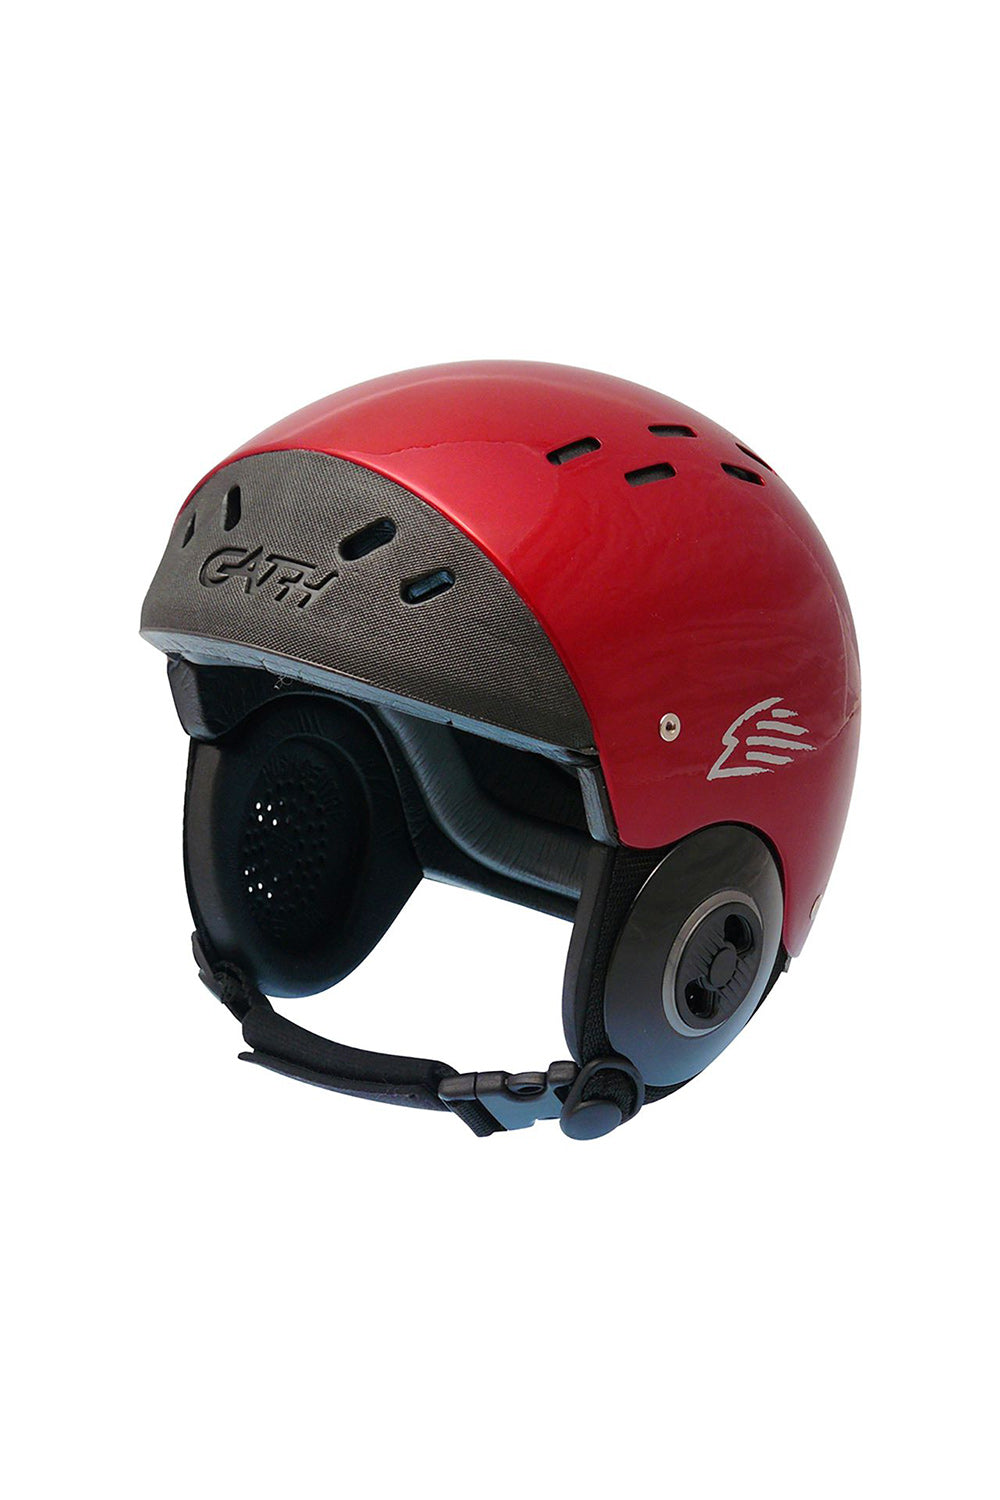 GATH Surf Convertible Helmet